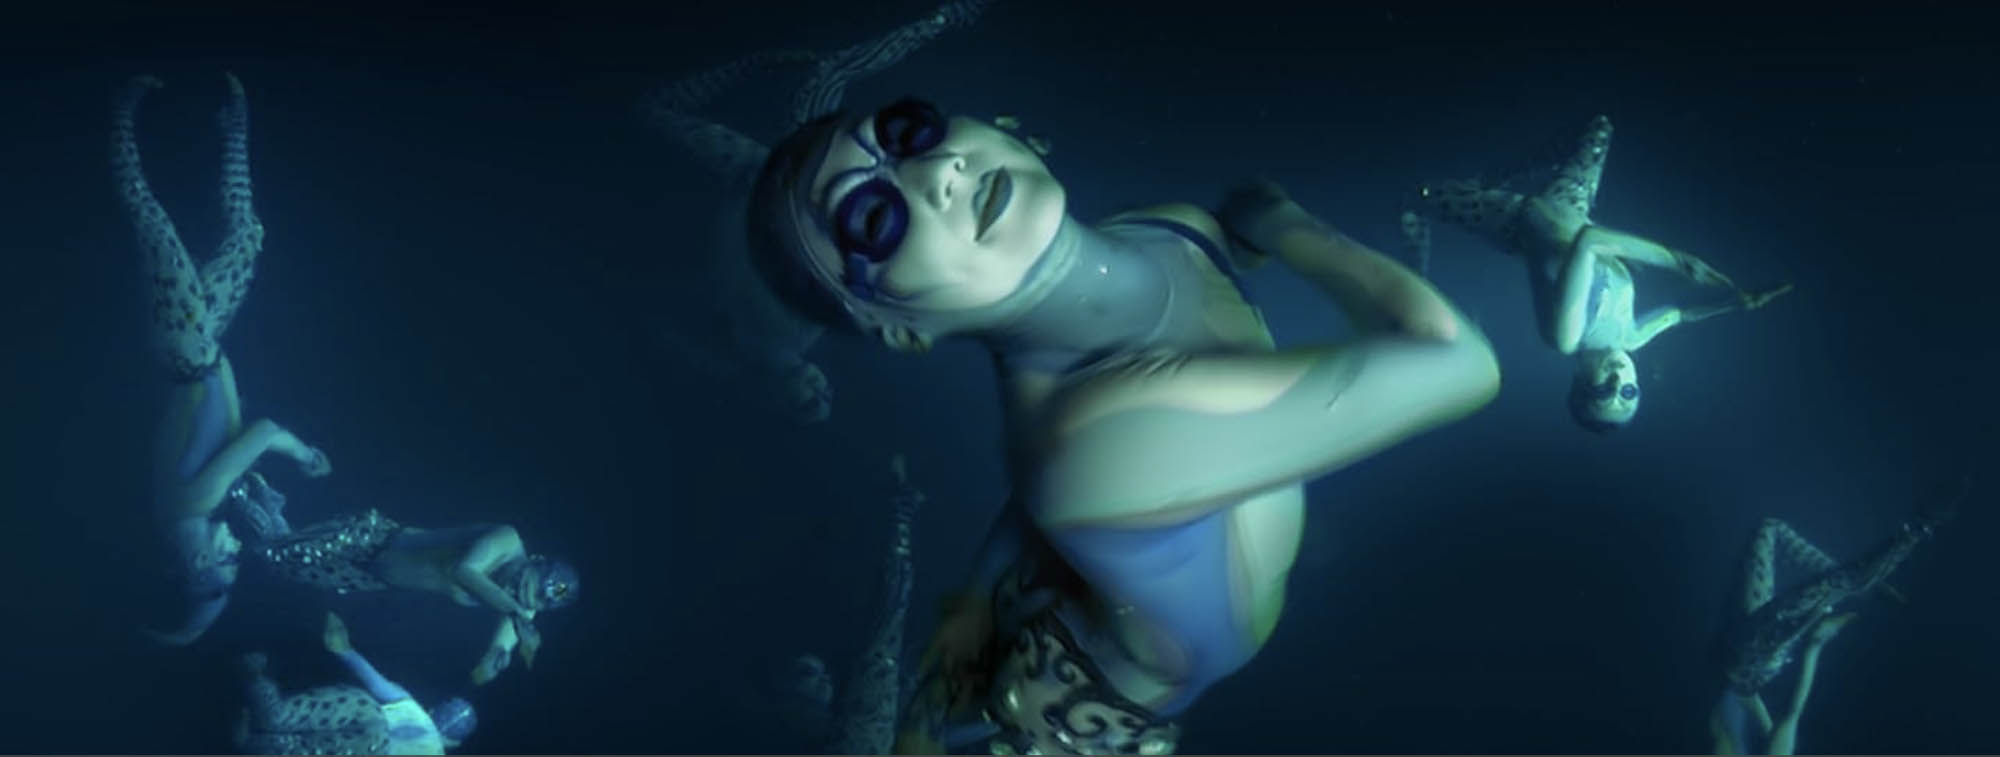 Cirque Du Soleil - Dreams of O (VR project) 7 - Cinematographer Eric Moynier